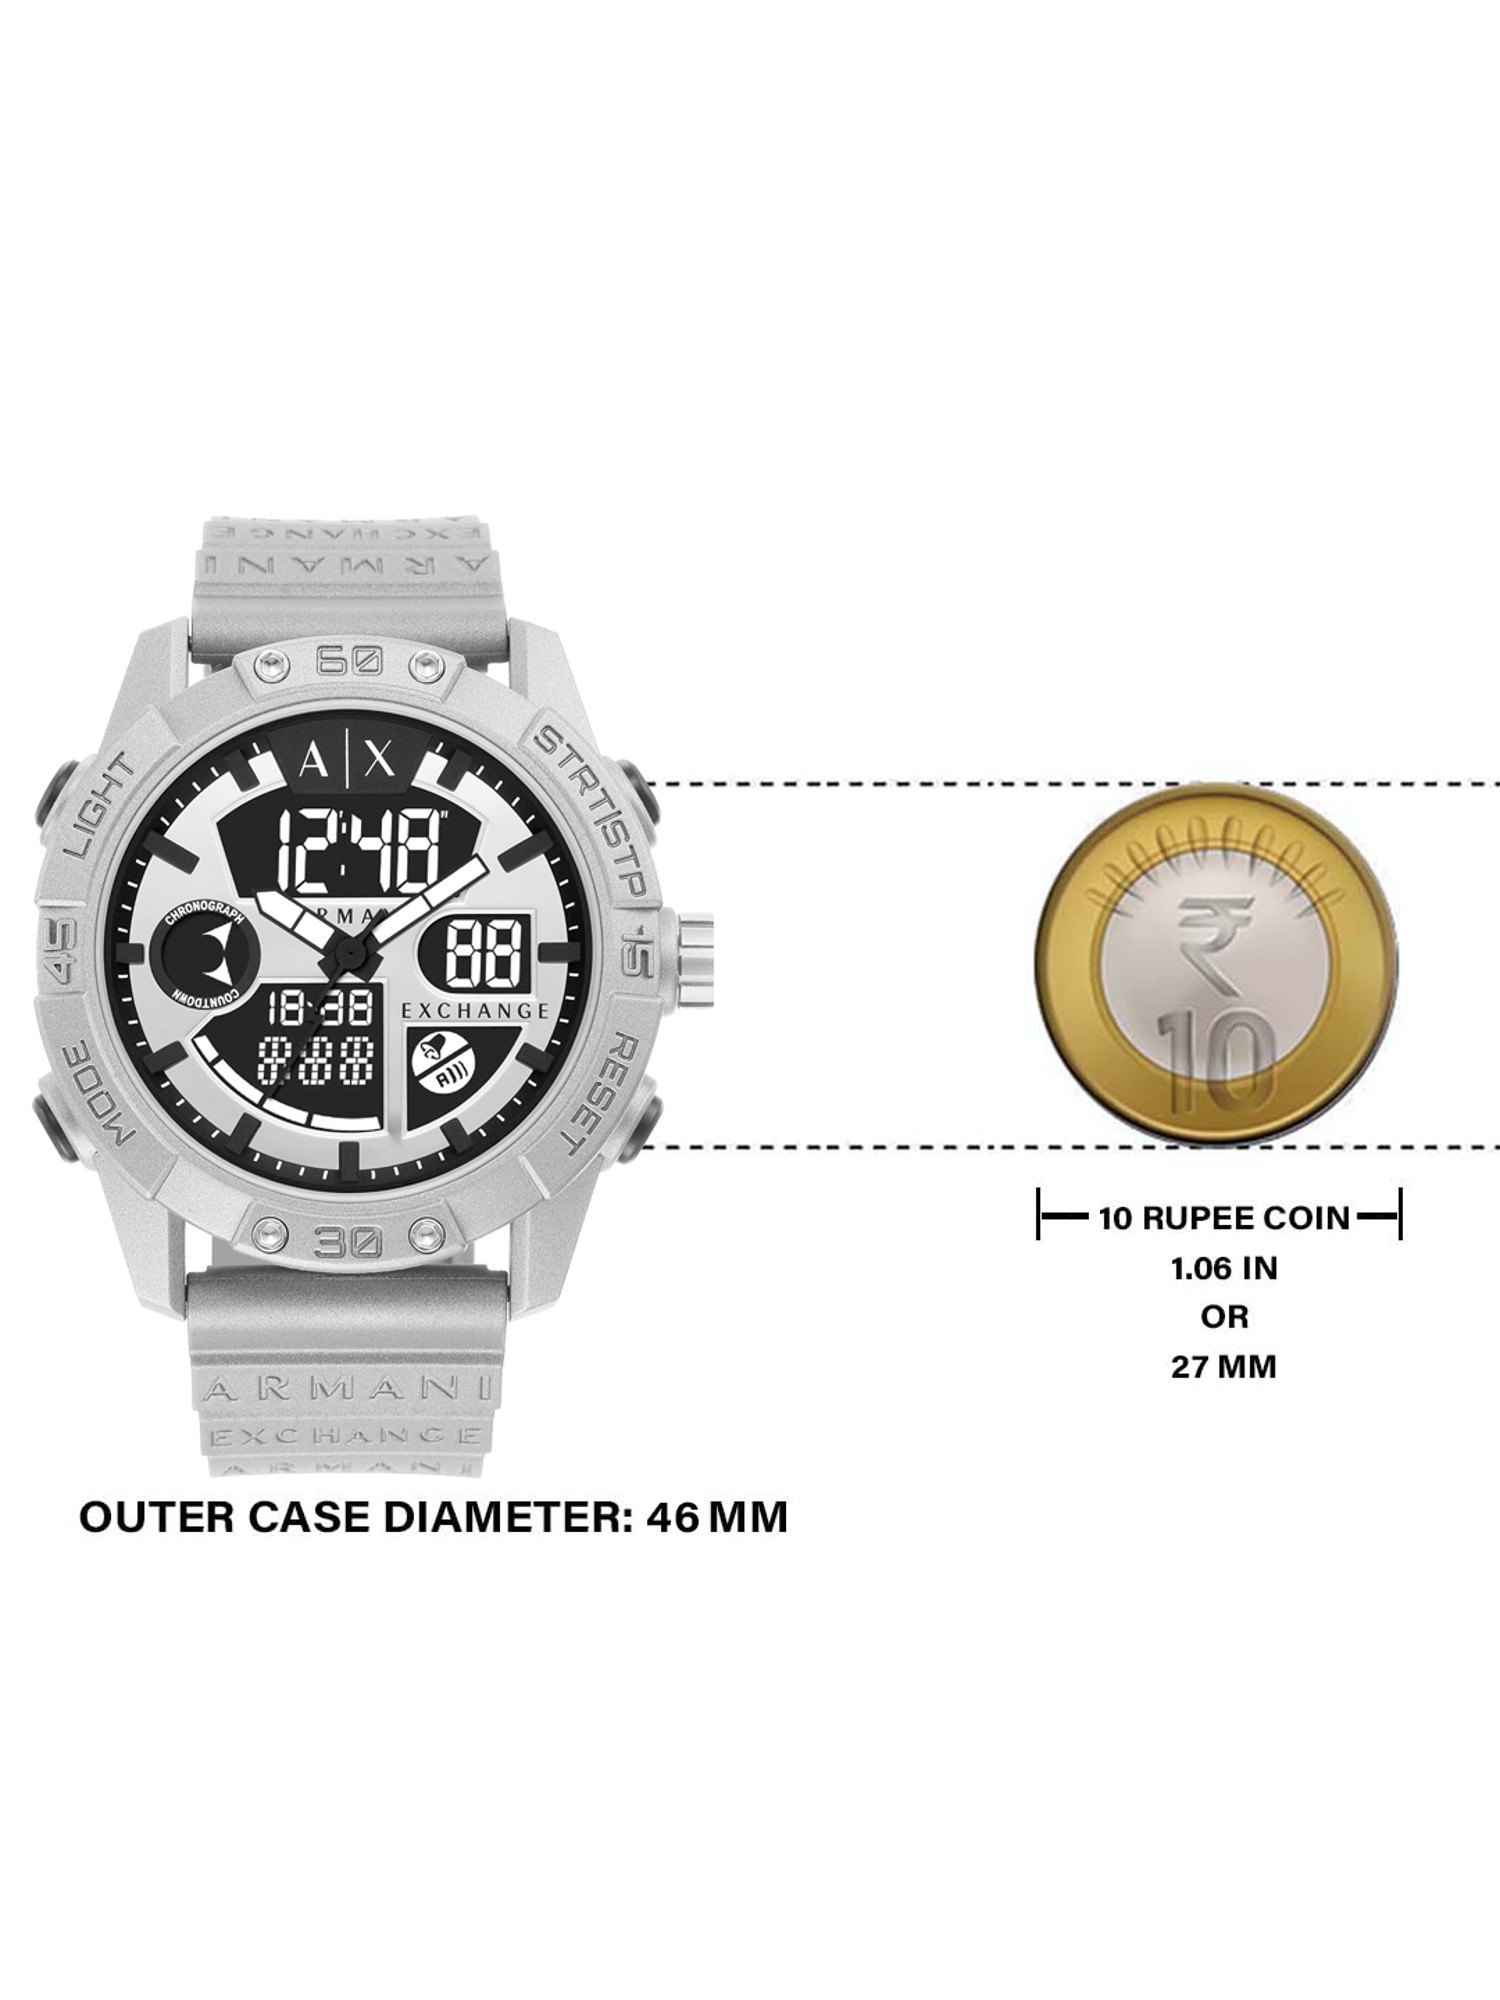 Tata Analog-Digital at @ AX2965 Buy for ARMANI EXCHANGE Best CLiQ Men Price Watch